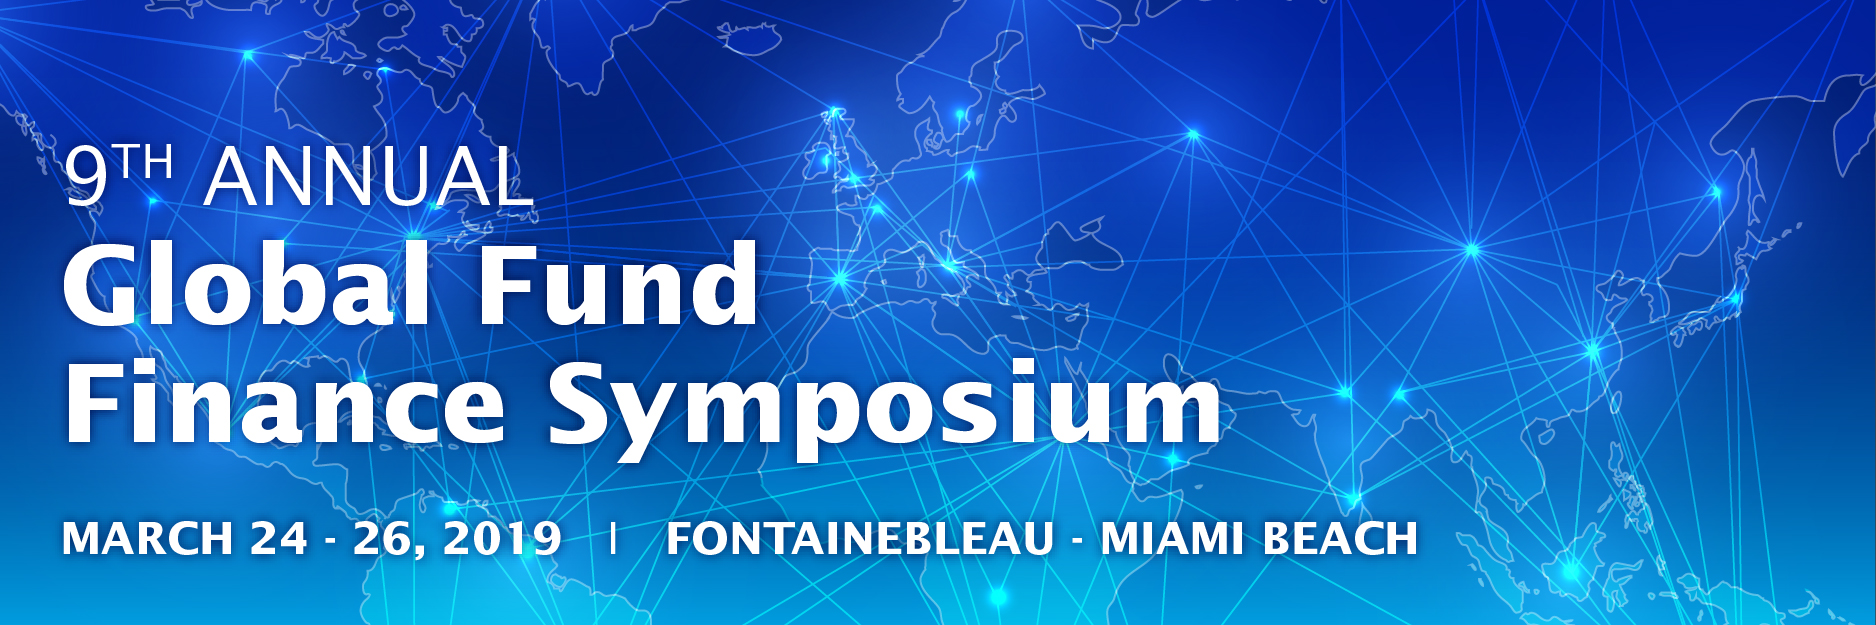 2019 Global Fund Finance Symposium